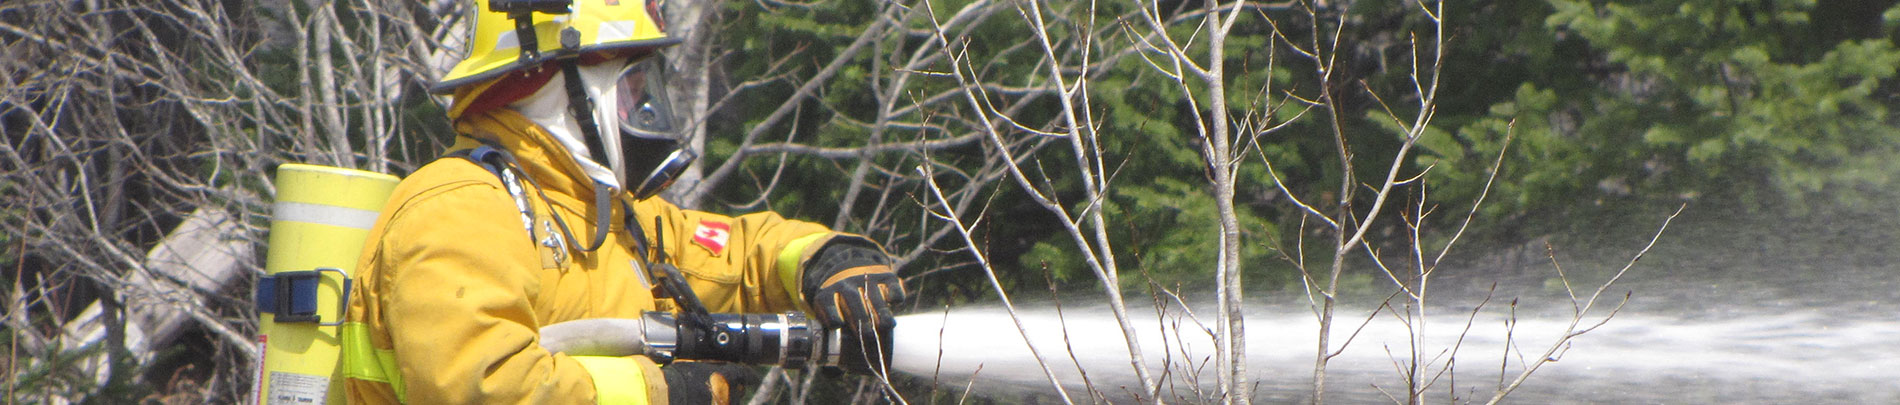 A Highlands East Volunteer Firefighter spraying his hose towards a fire.